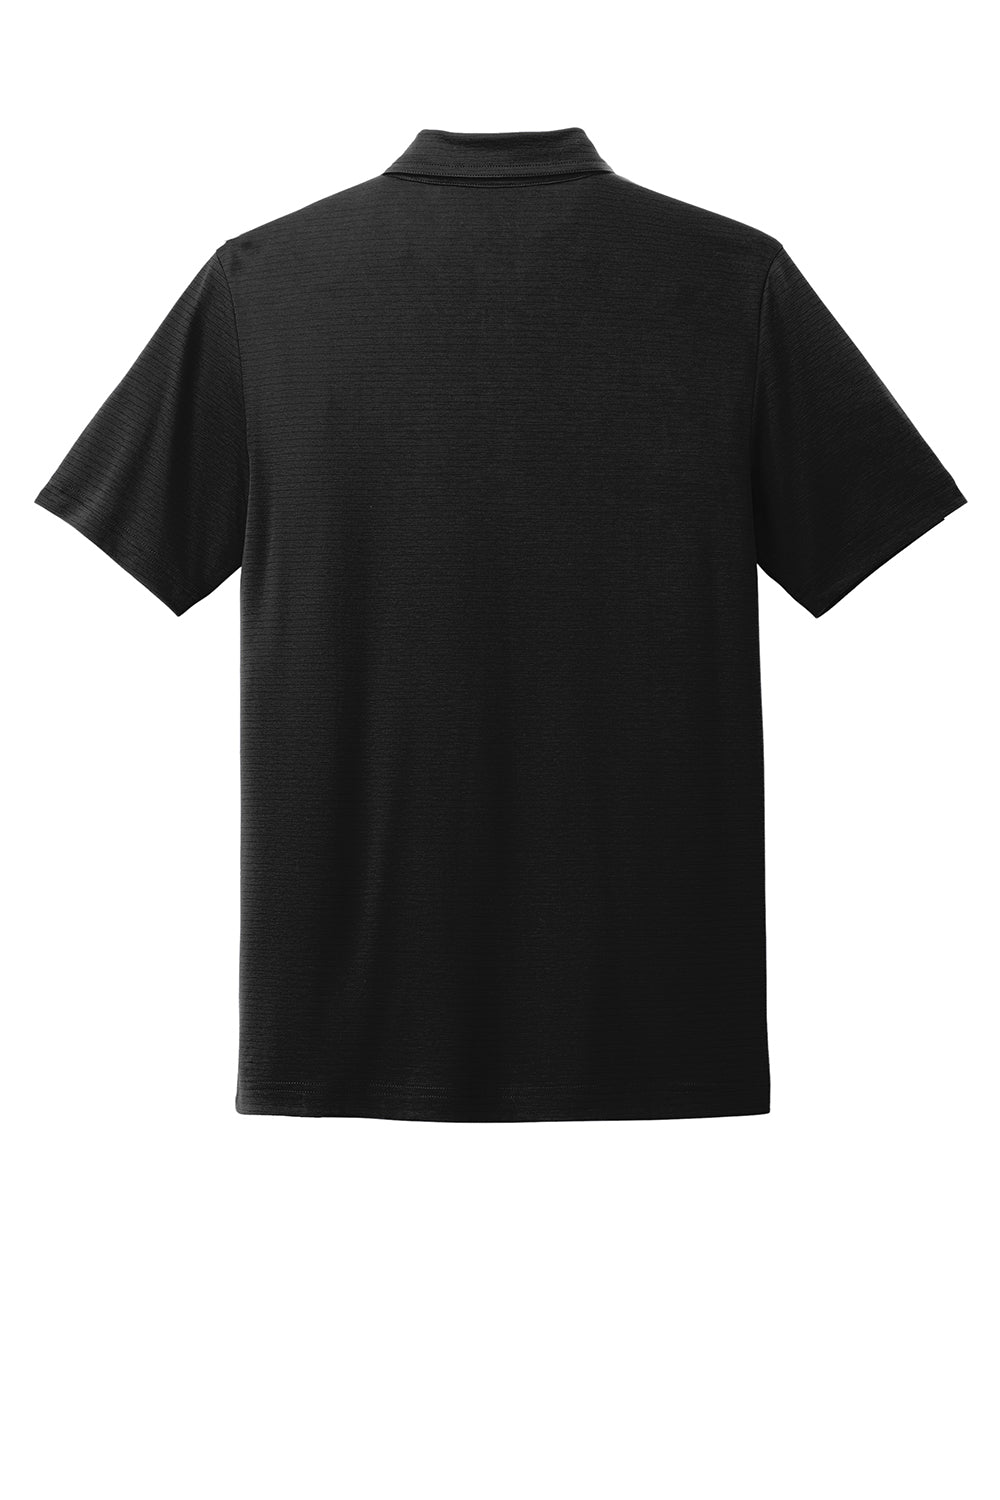 TravisMathew TM1MY399 Mens Bayfront Moisture Wicking Short Sleeve Polo Shirt Black Flat Back